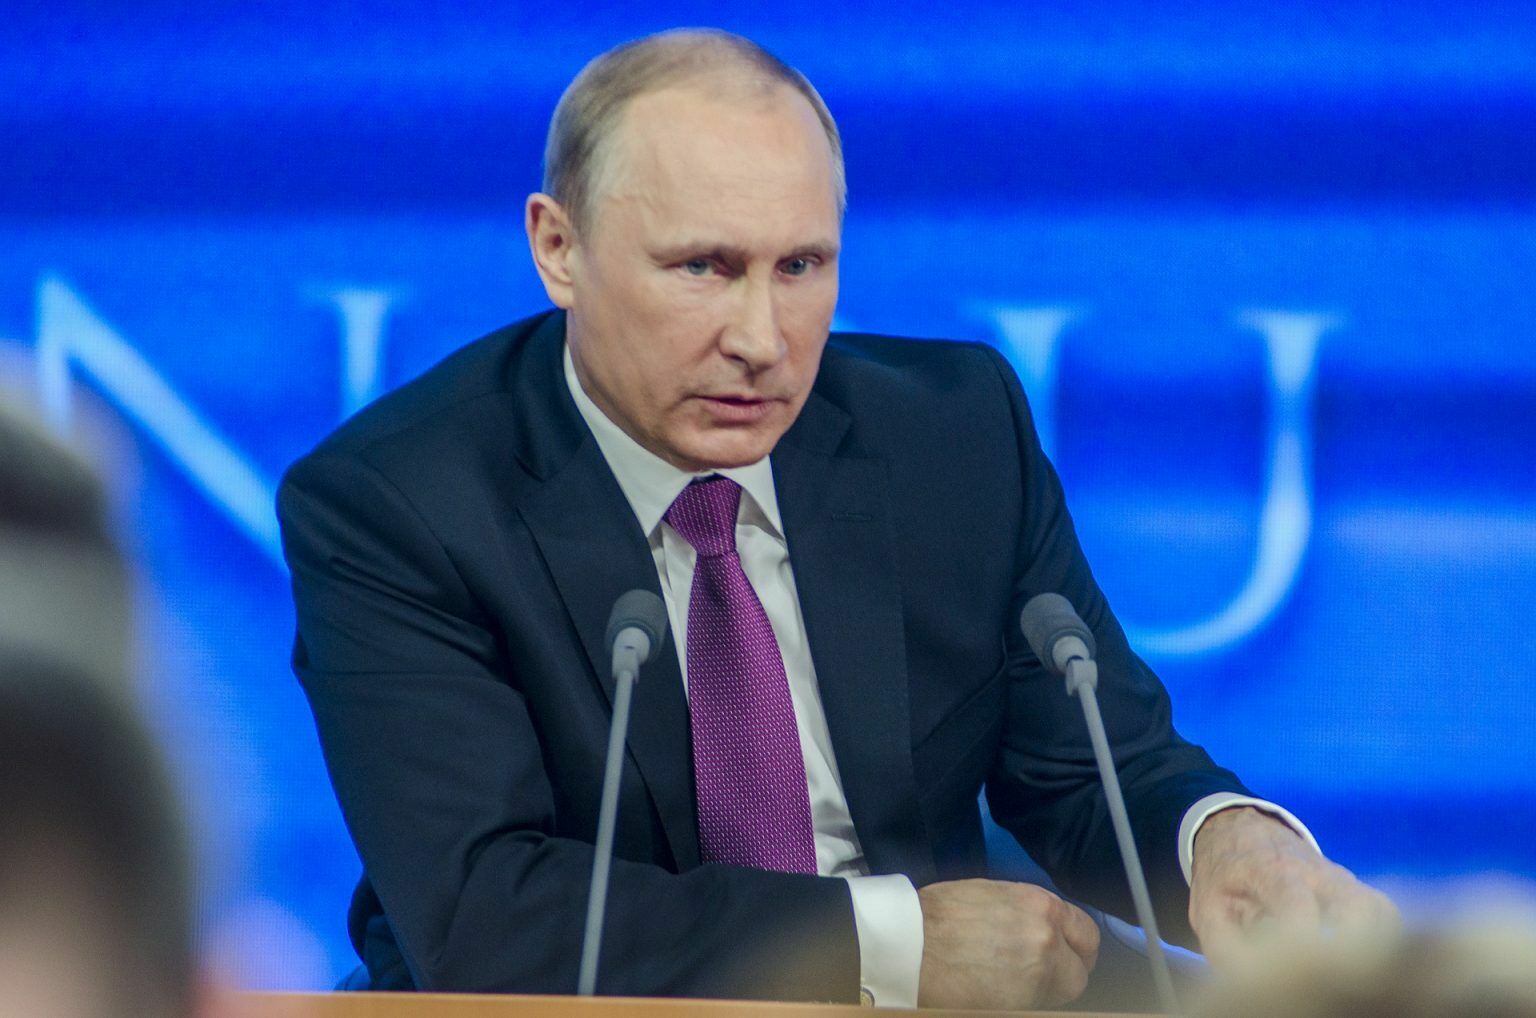 Putin said that Russia did not start military operation in Ukraine